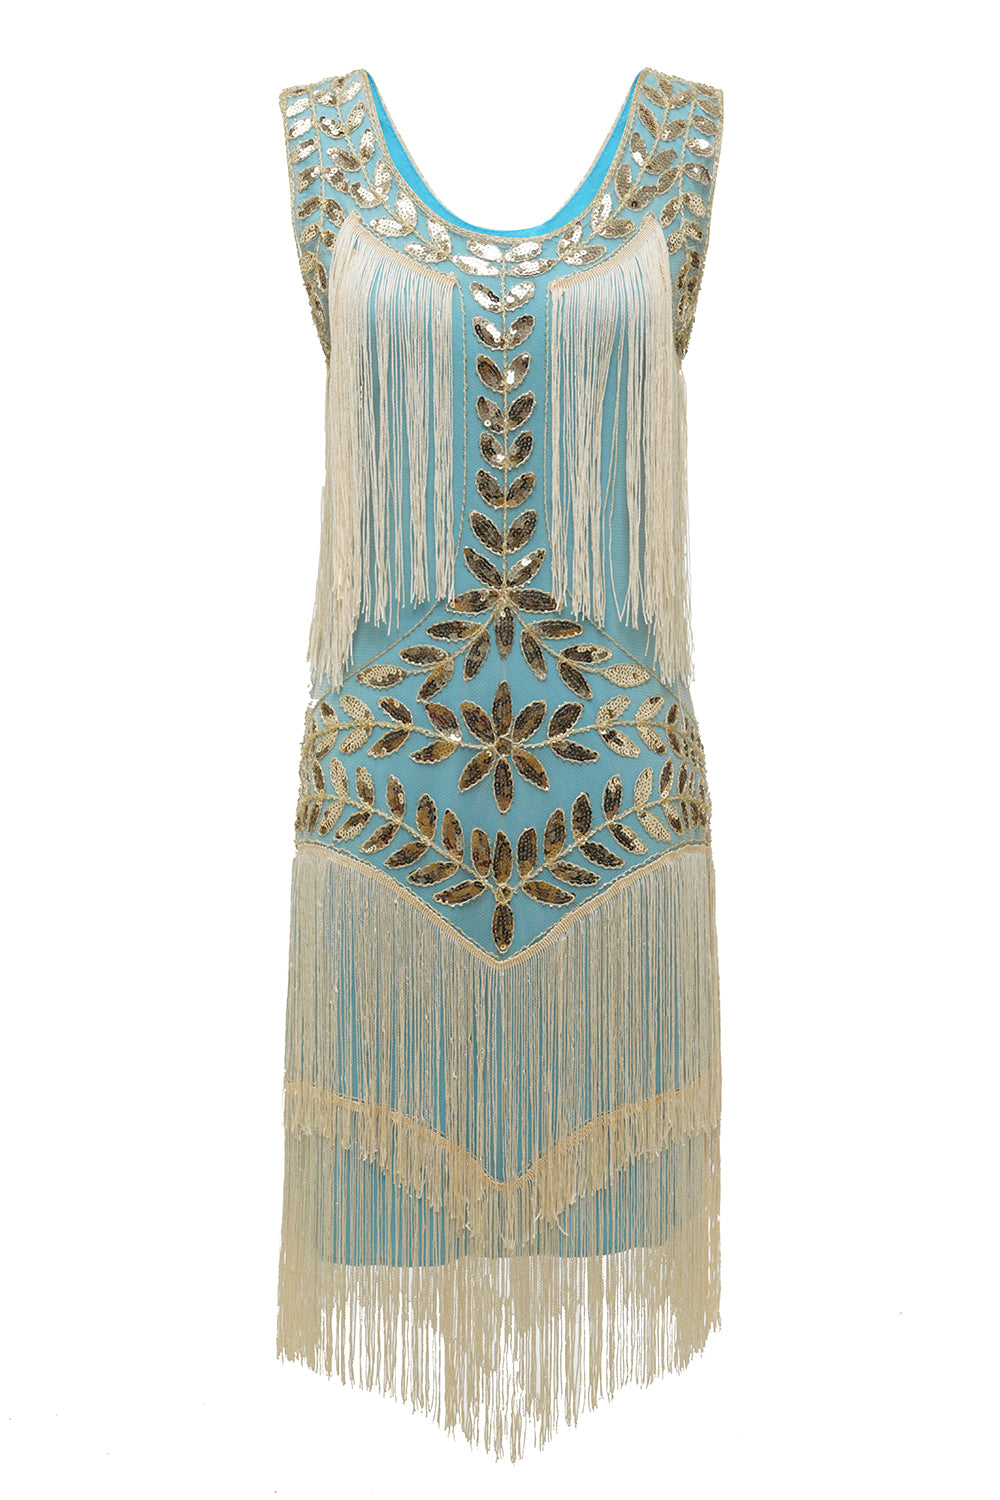 Zapaka Women 1920s Gatsby Dress Champagne Round Neck Vintage Dress with ...